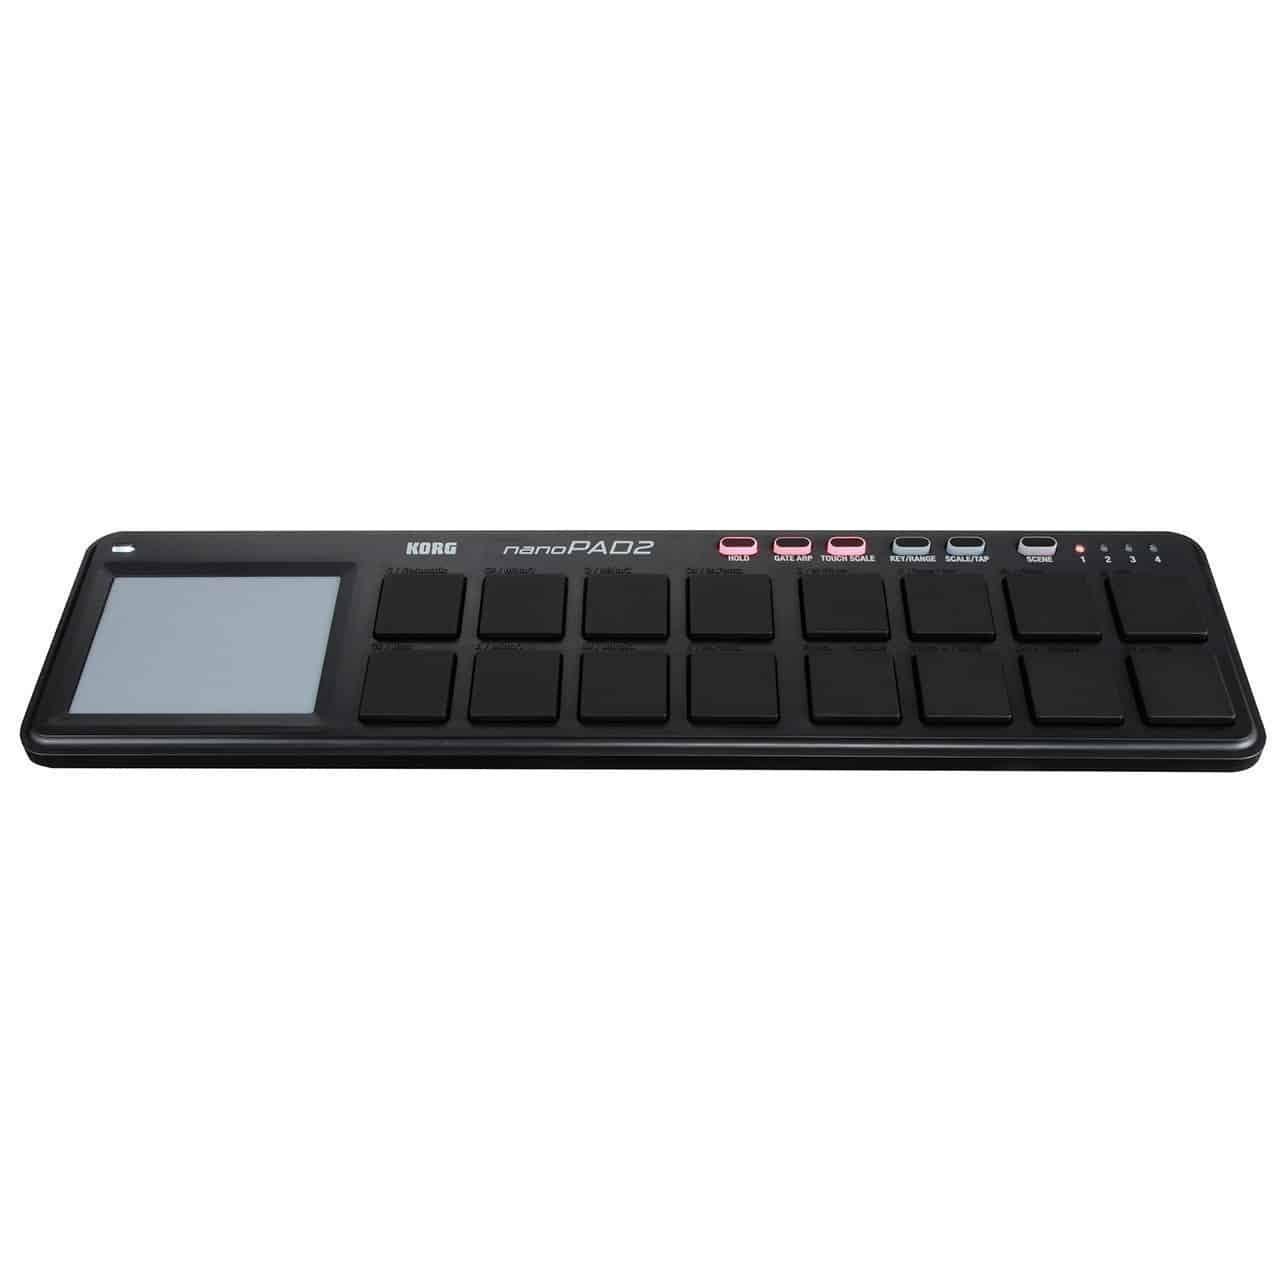 Korg - Korg nanoPAD 2 Slim-Line USB Pad MIDI Controller - BLACK - Live & Recording - Midi Controllers by Korg at Muso's Stuff